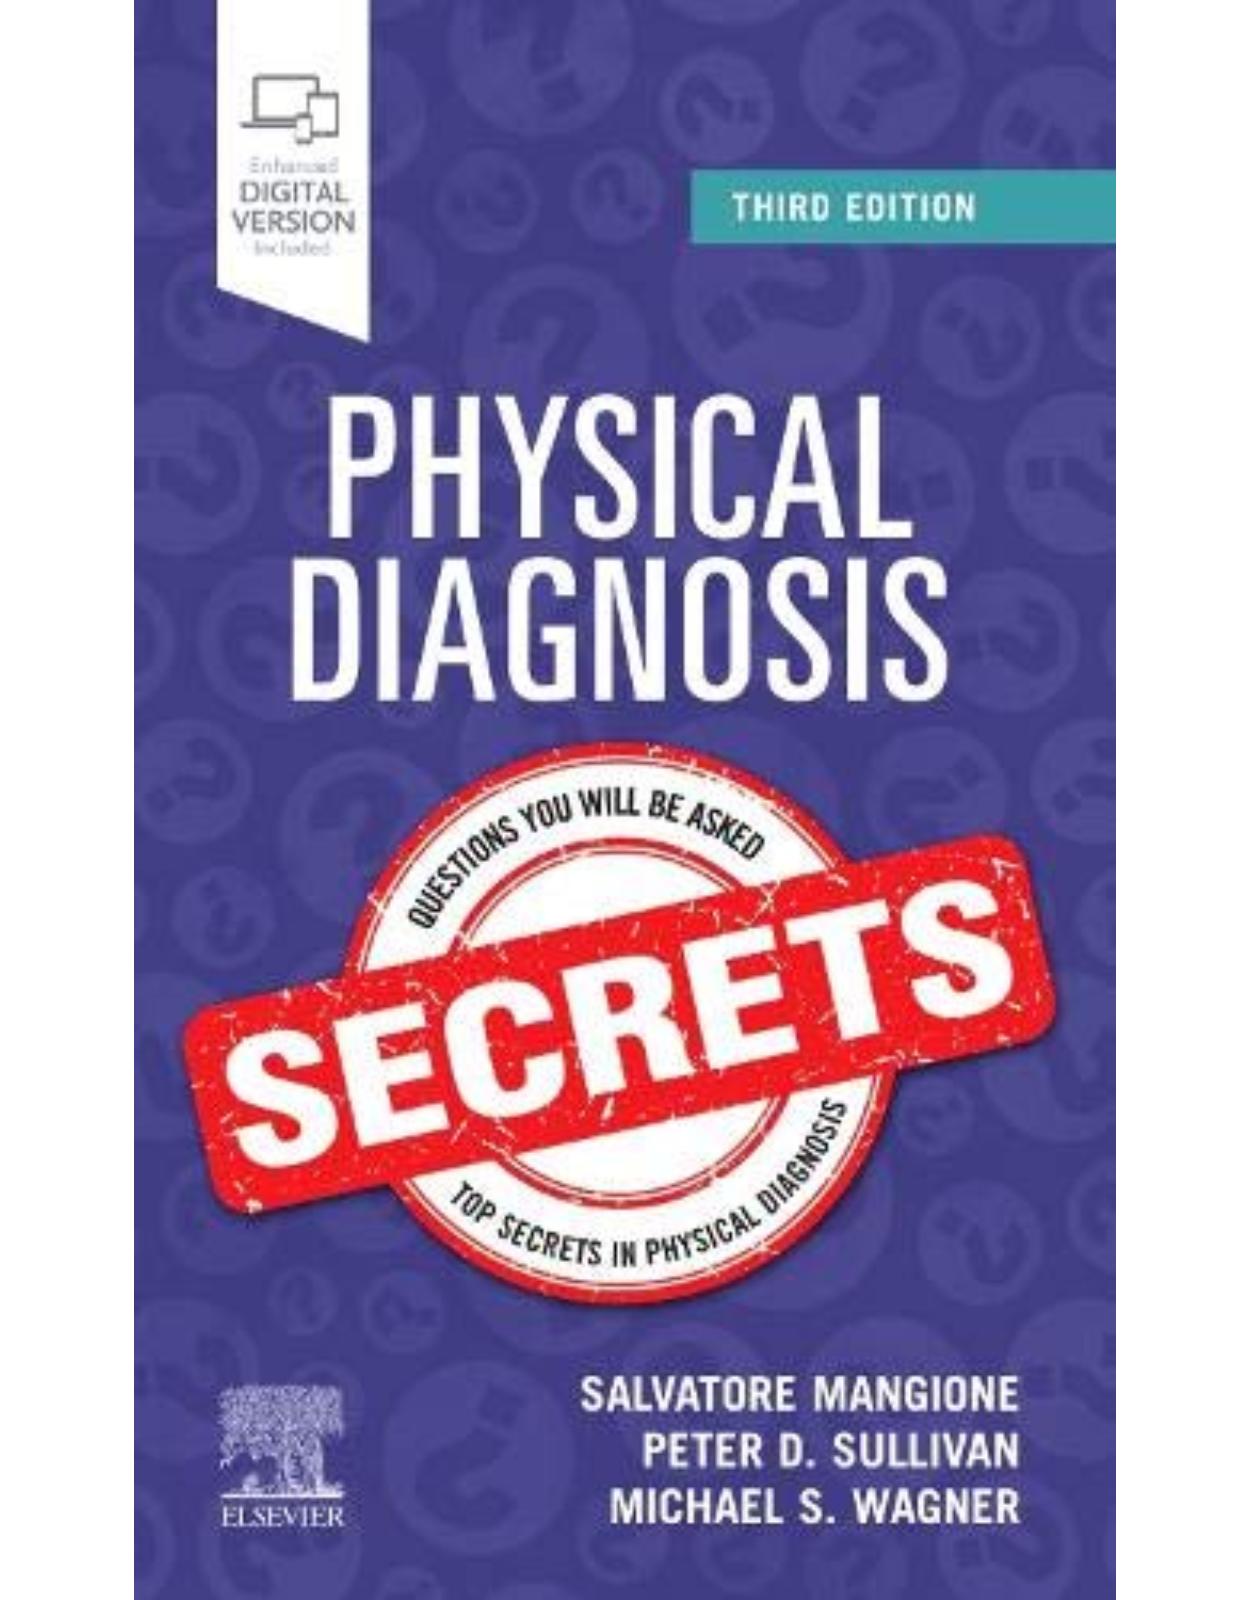 Physical Diagnosis Secrets 